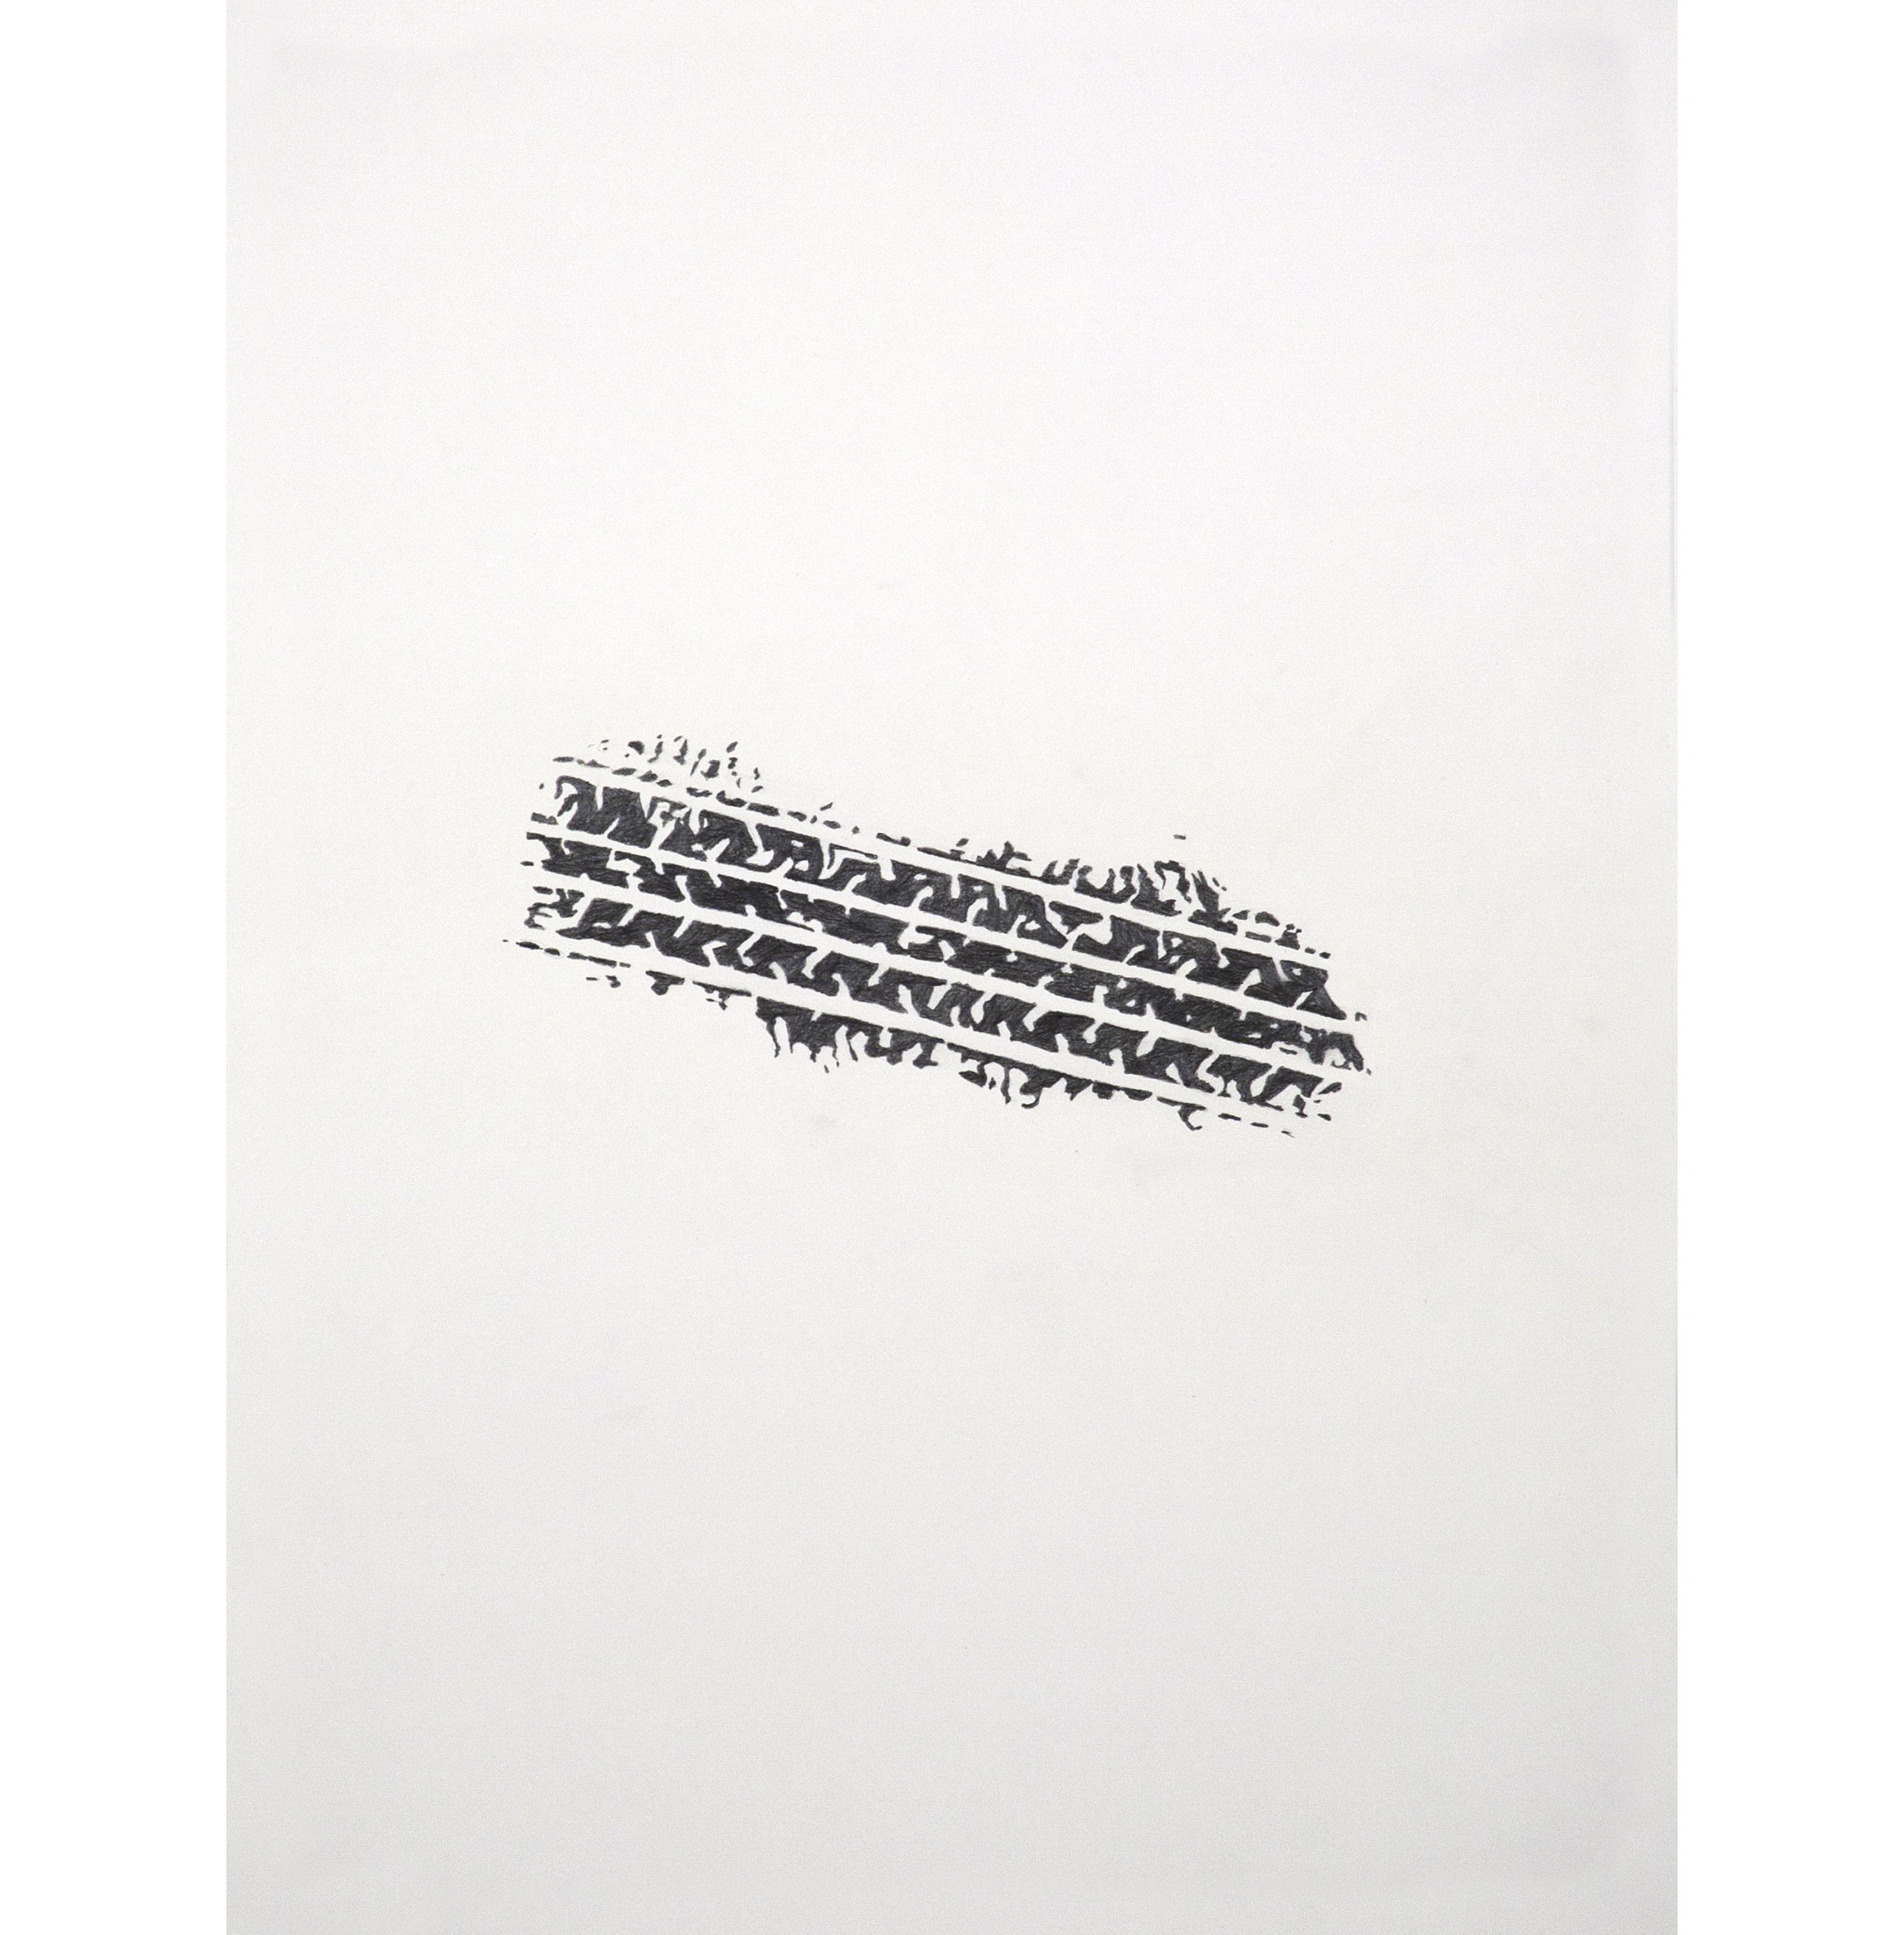 Lexicon 33, 2013, graphite on paper, 24” x 18”